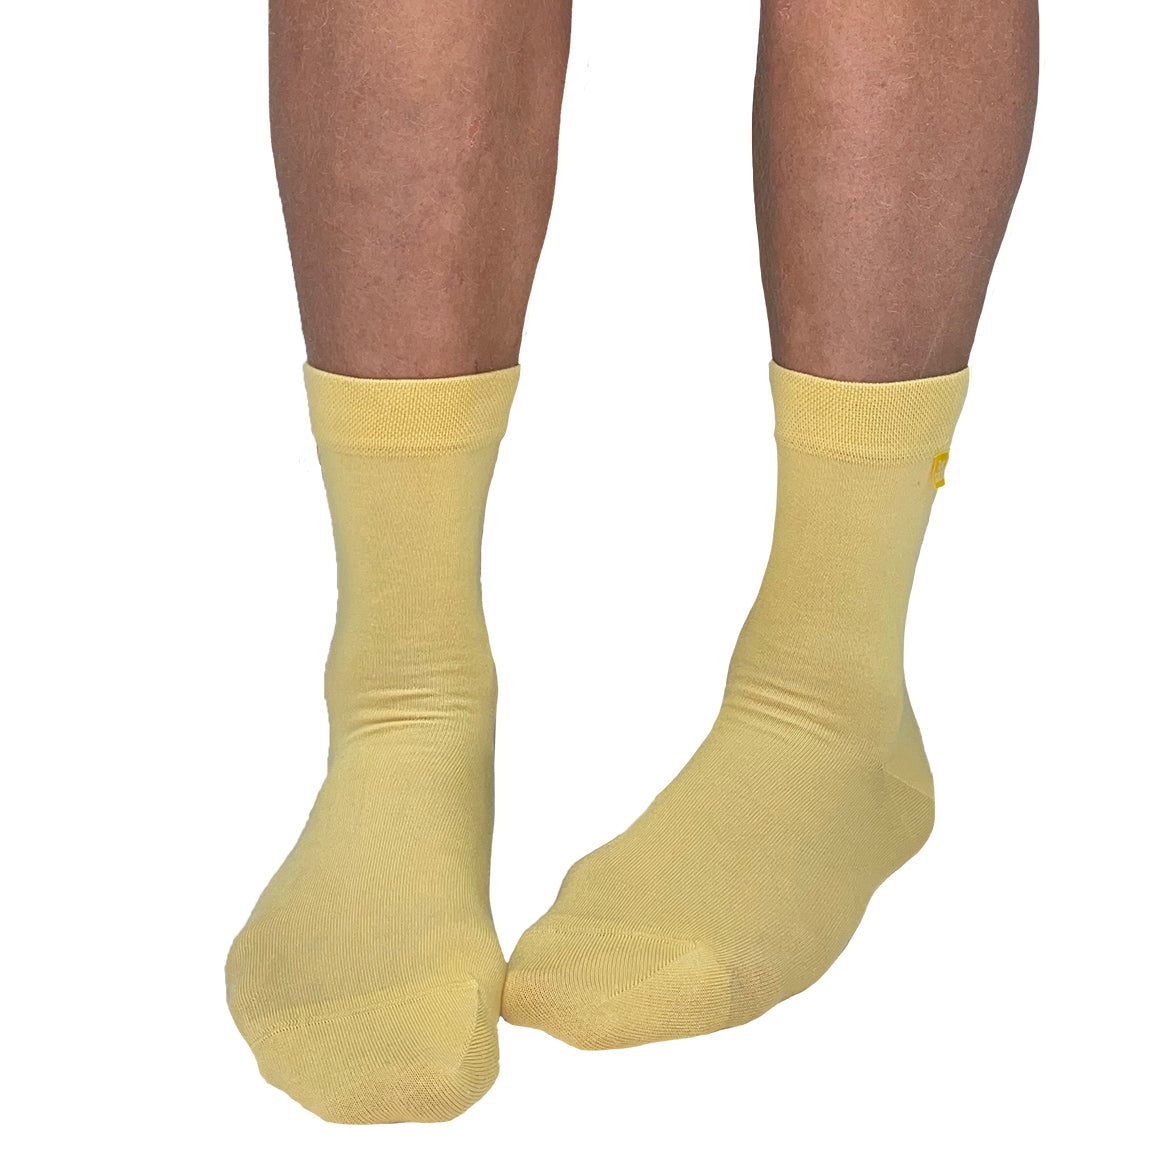 Yellow sock from Tag Socks